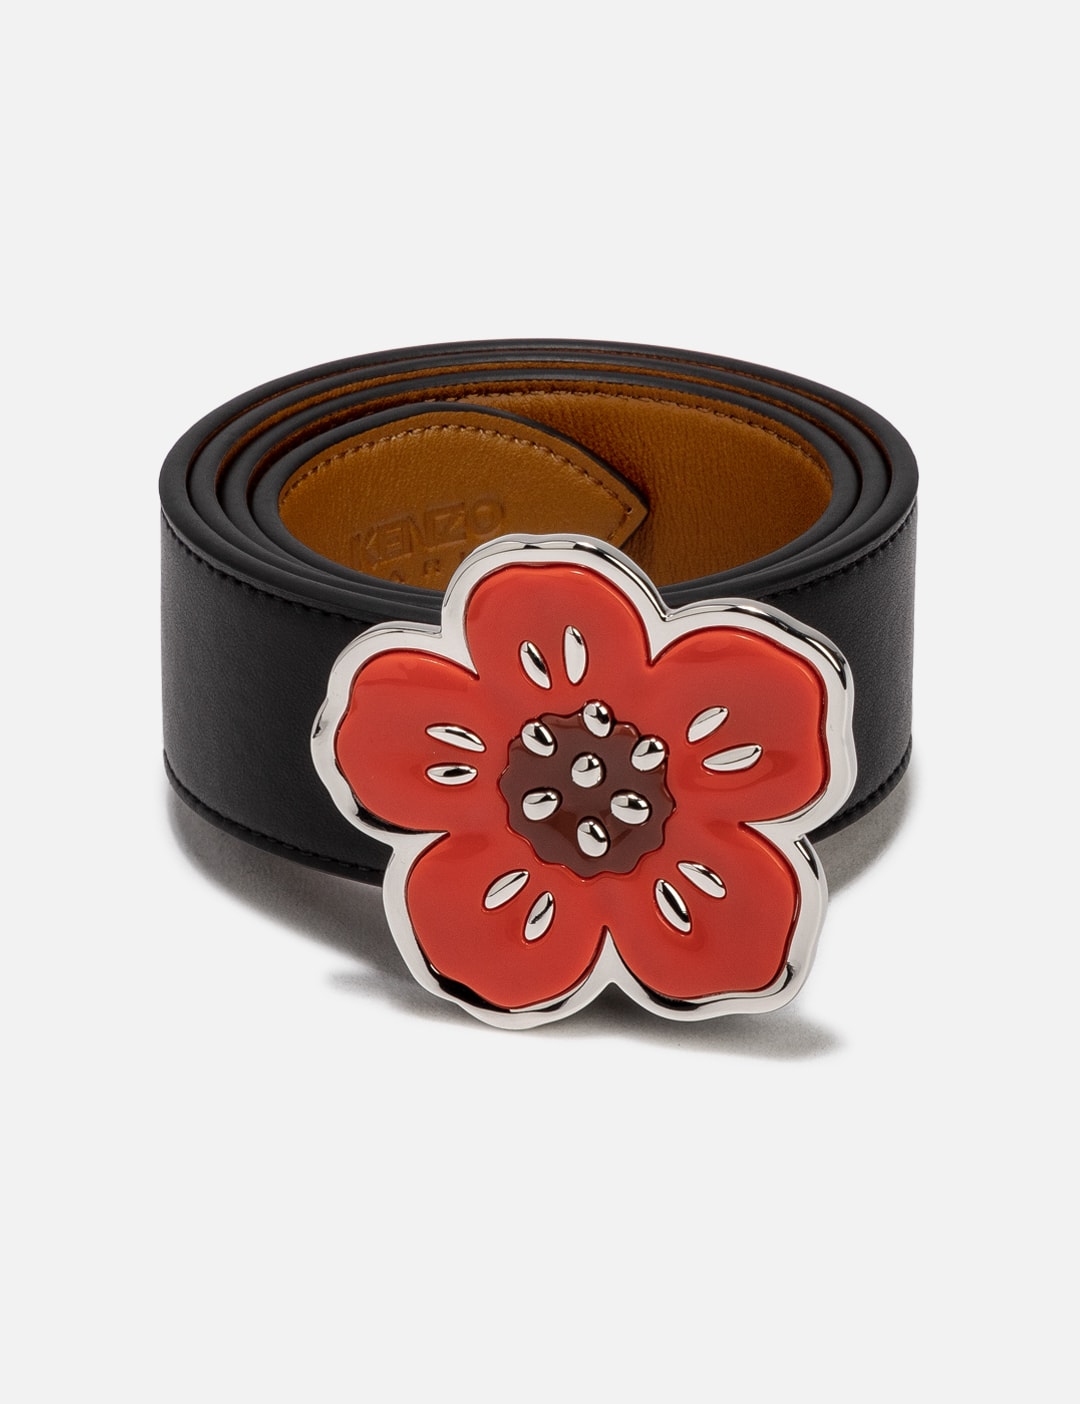 NieuwZeeland Eerste ondeugd Kenzo - 'Boke Flower' Wide Reversible Leather Belt | HBX - Globally Curated  Fashion and Lifestyle by Hypebeast